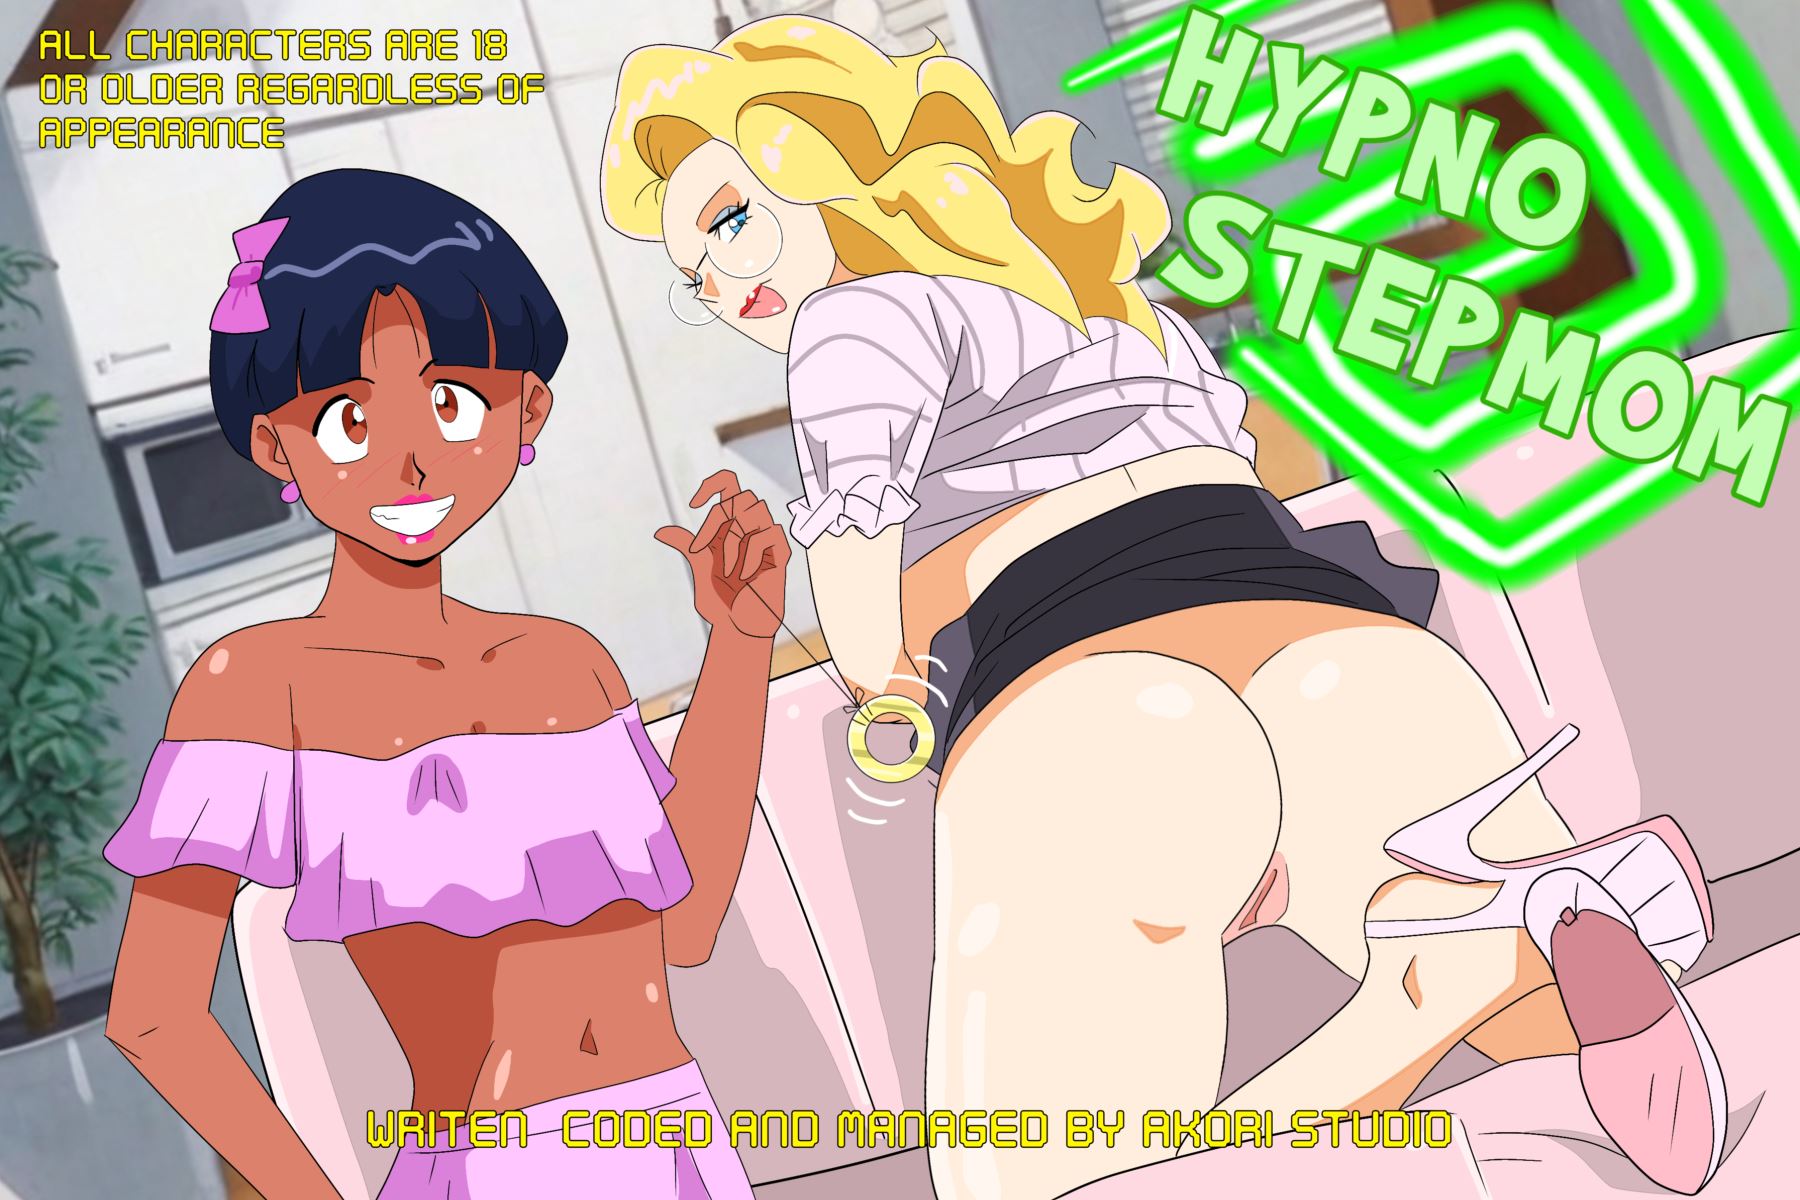 Hypno Stepmom porn xxx game download cover